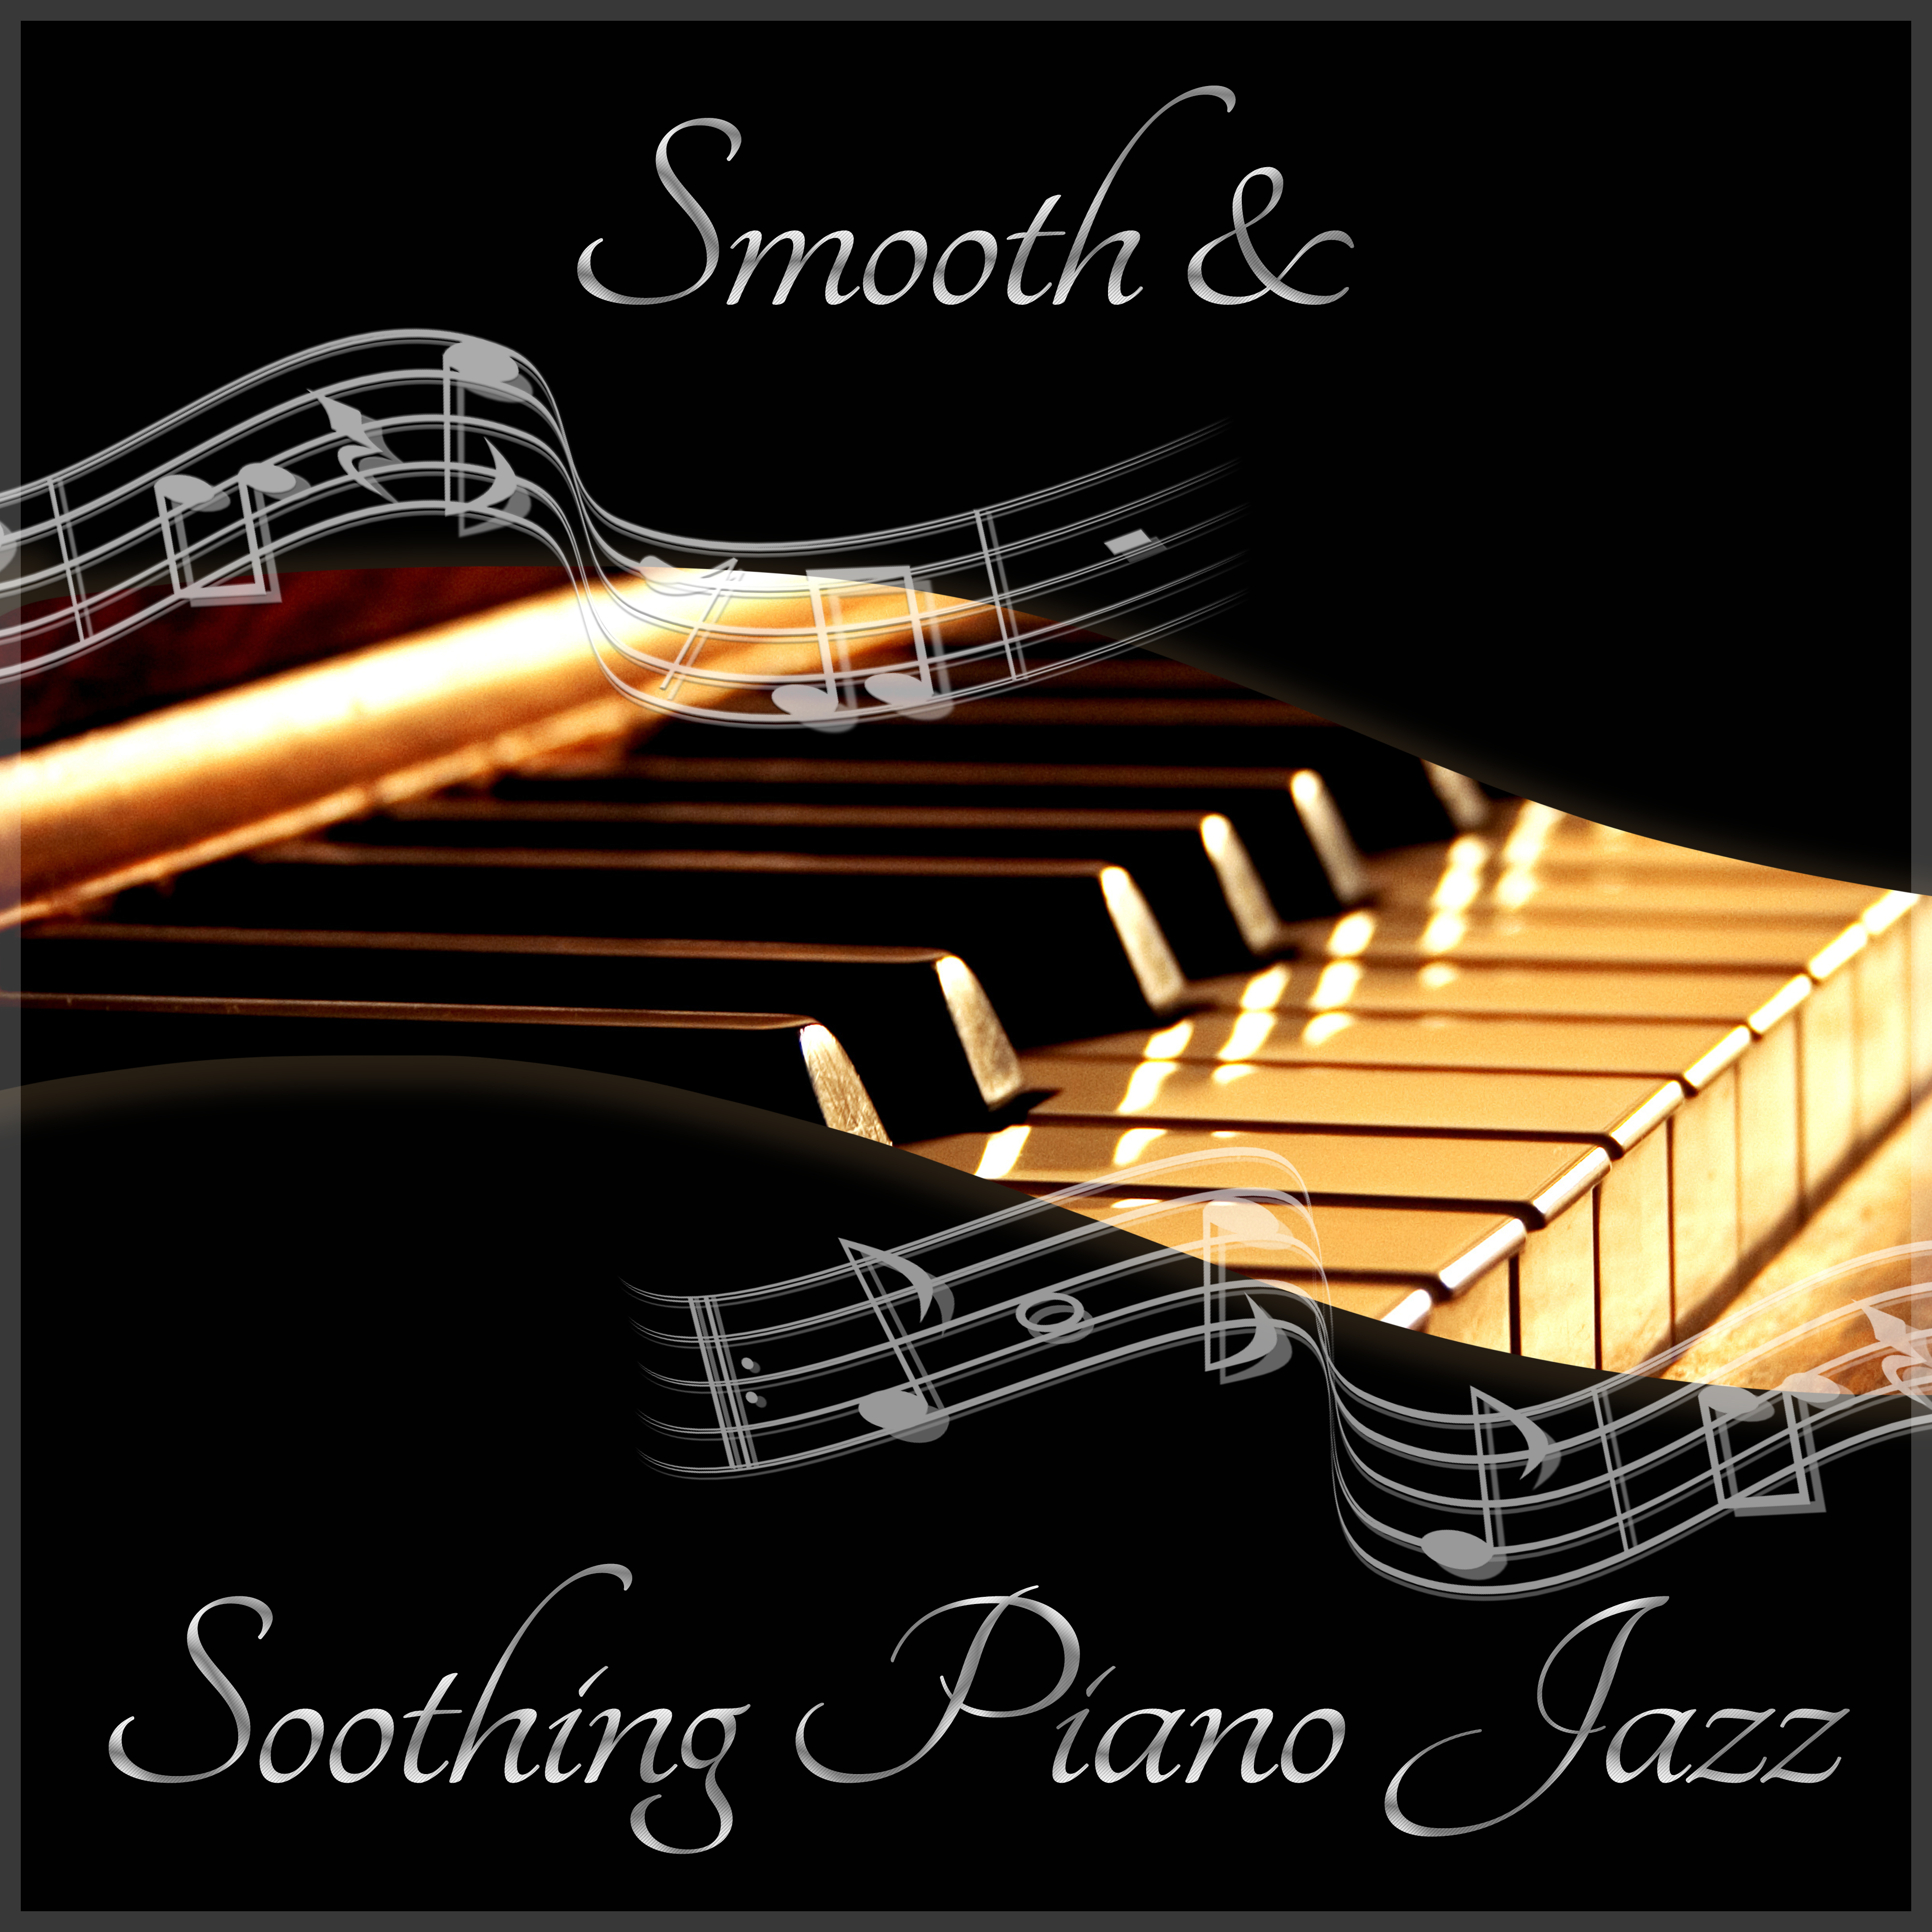 Smooth & Soothing Piano Jazz - Easy Listening, Piano Jazz Music, Night Jazz, Jazz Collection, Mellow Jazz, Background Piano Music, Sensual Piano, Soft Jazz